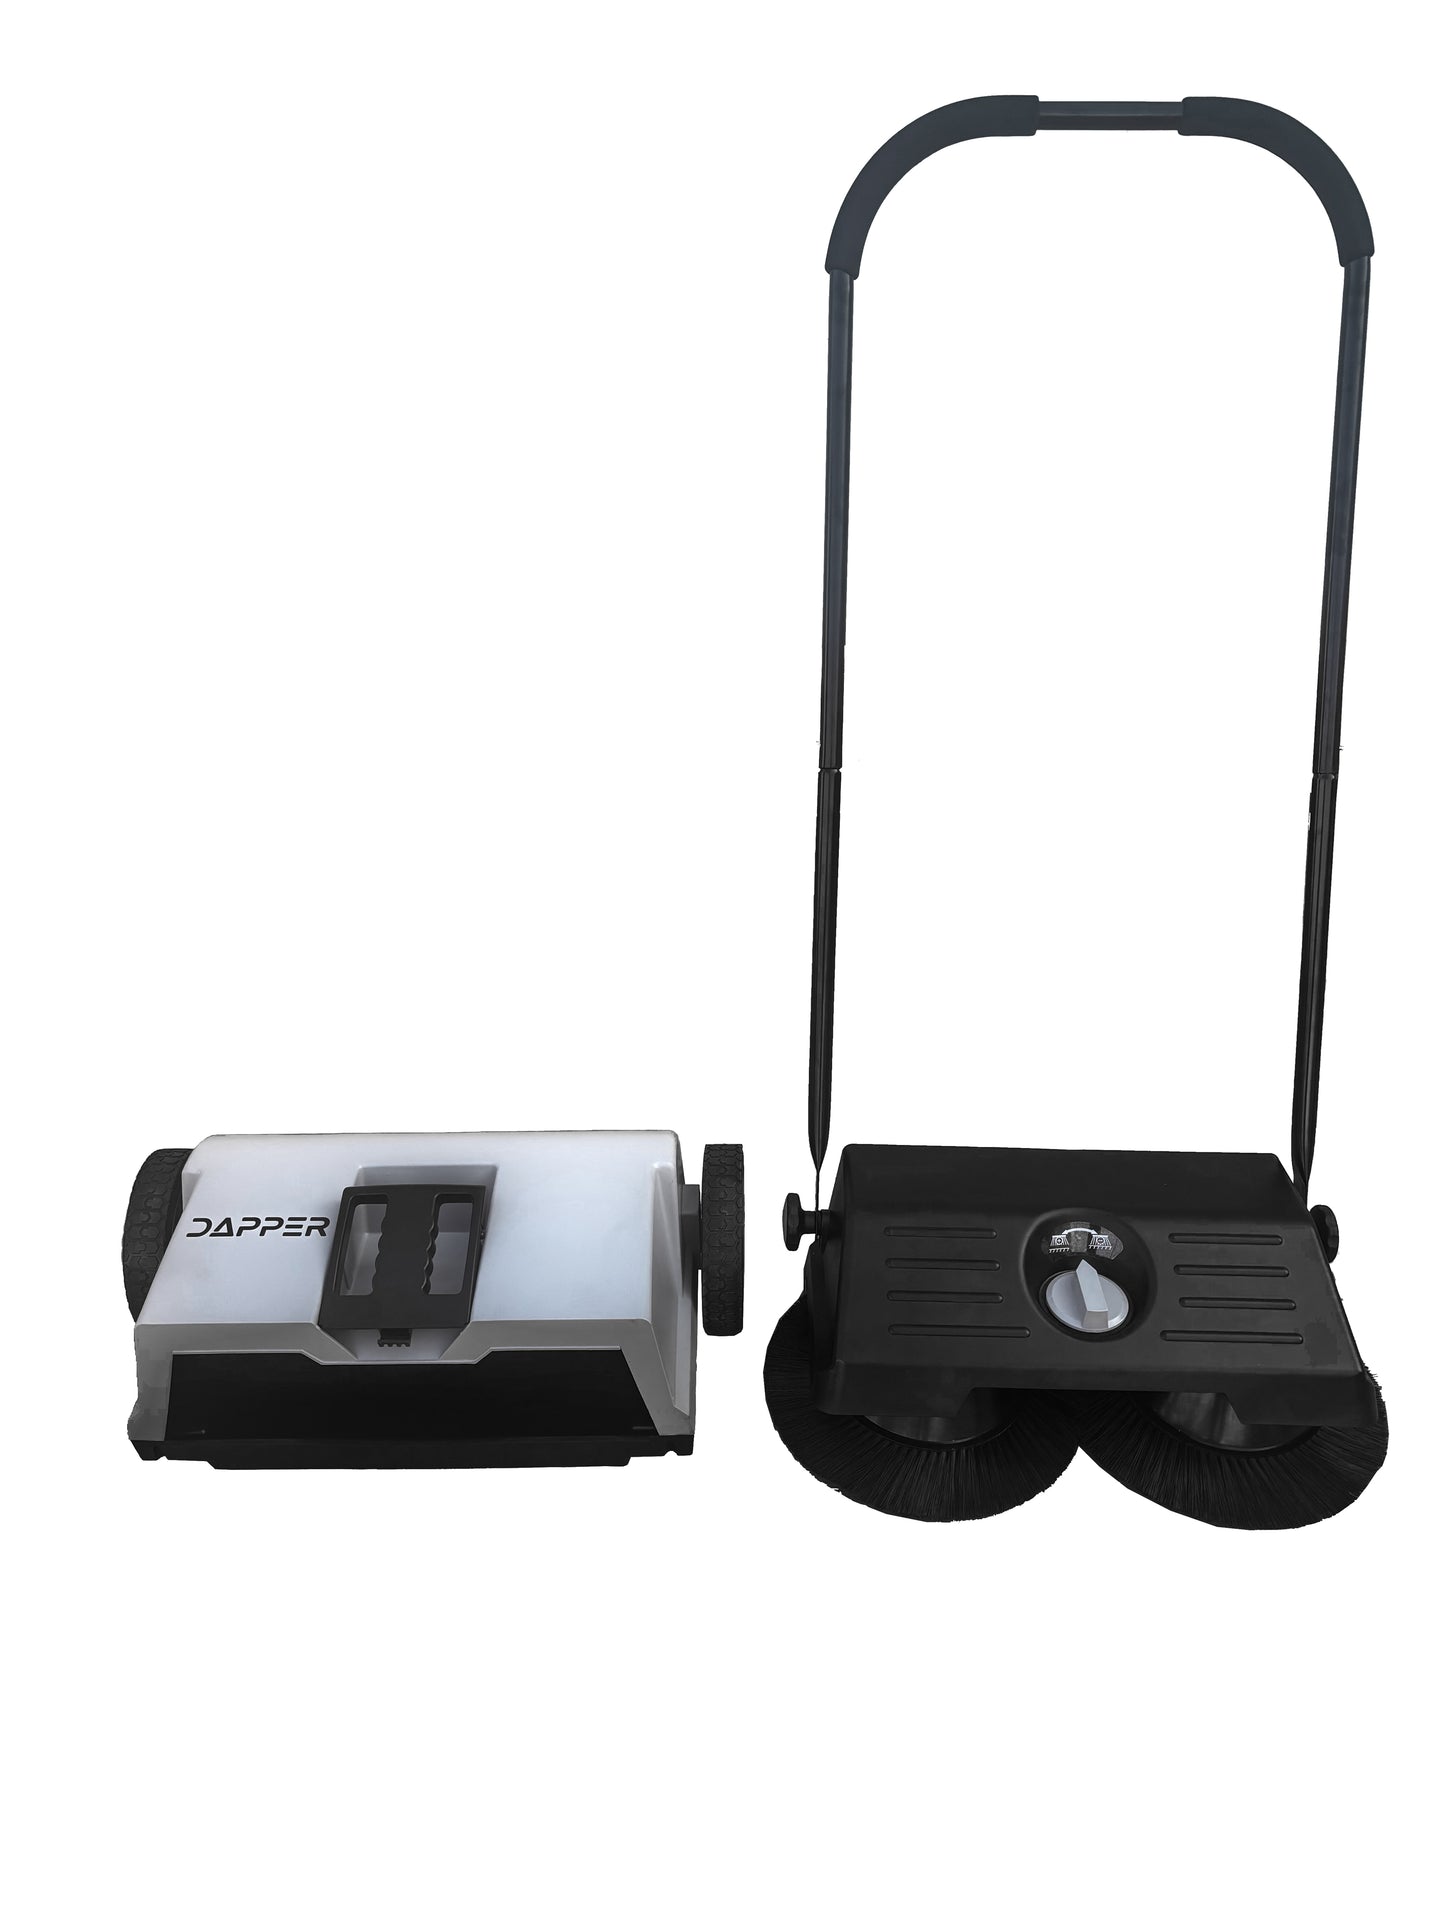 Walk-Behind Outdoor Hand Push Sweeper - 6.5 Gallon Capacity - 22" Sweeping Width DP-FS1101